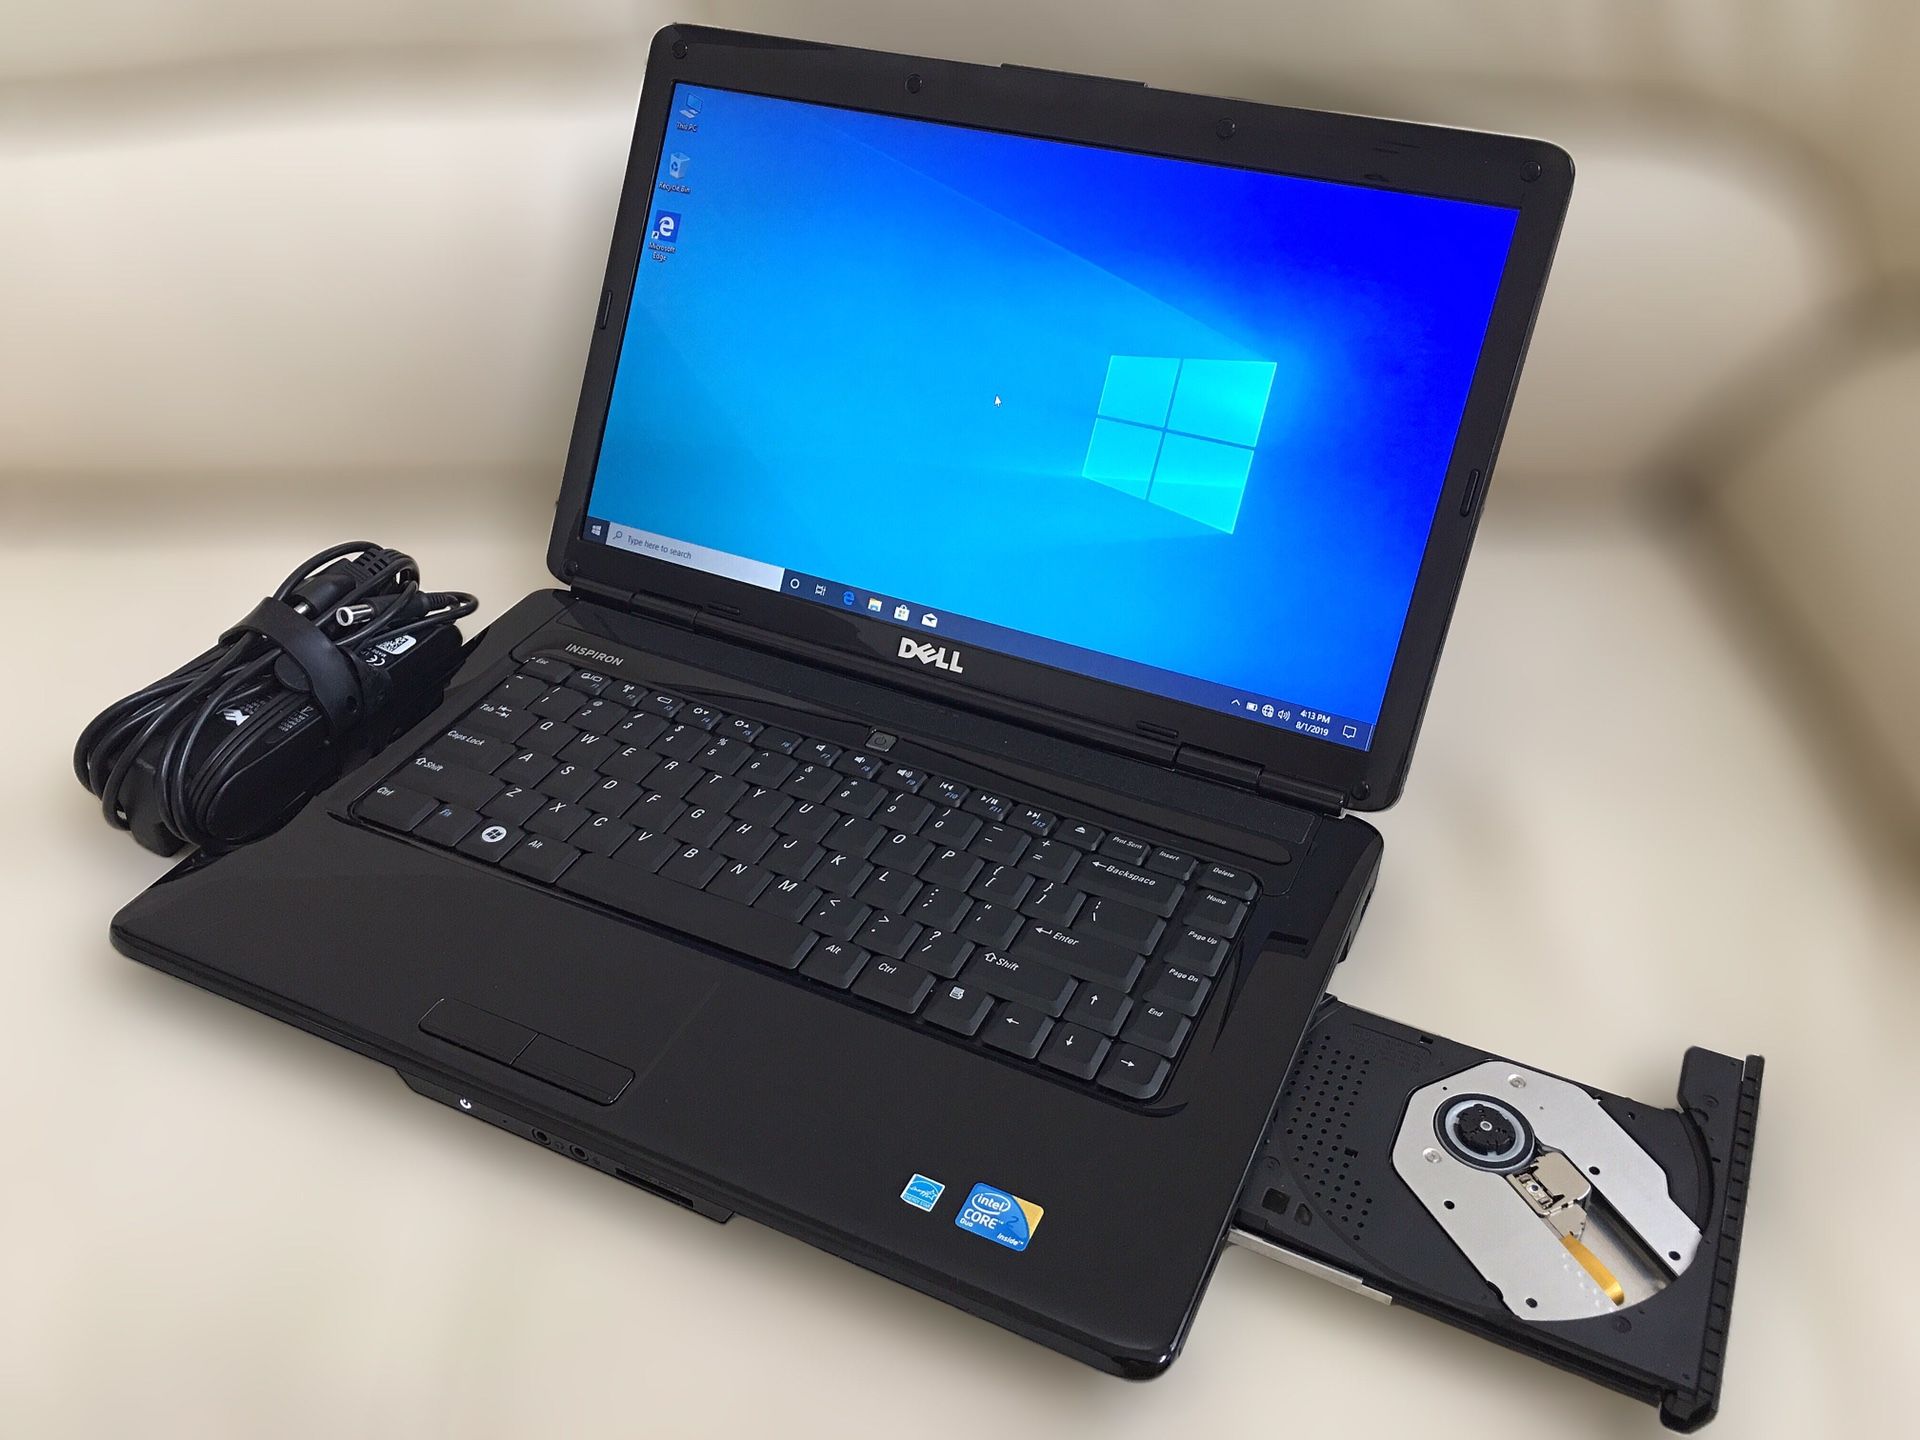 Dell laptop / Windows 10 Pro / Antivirus / Charger